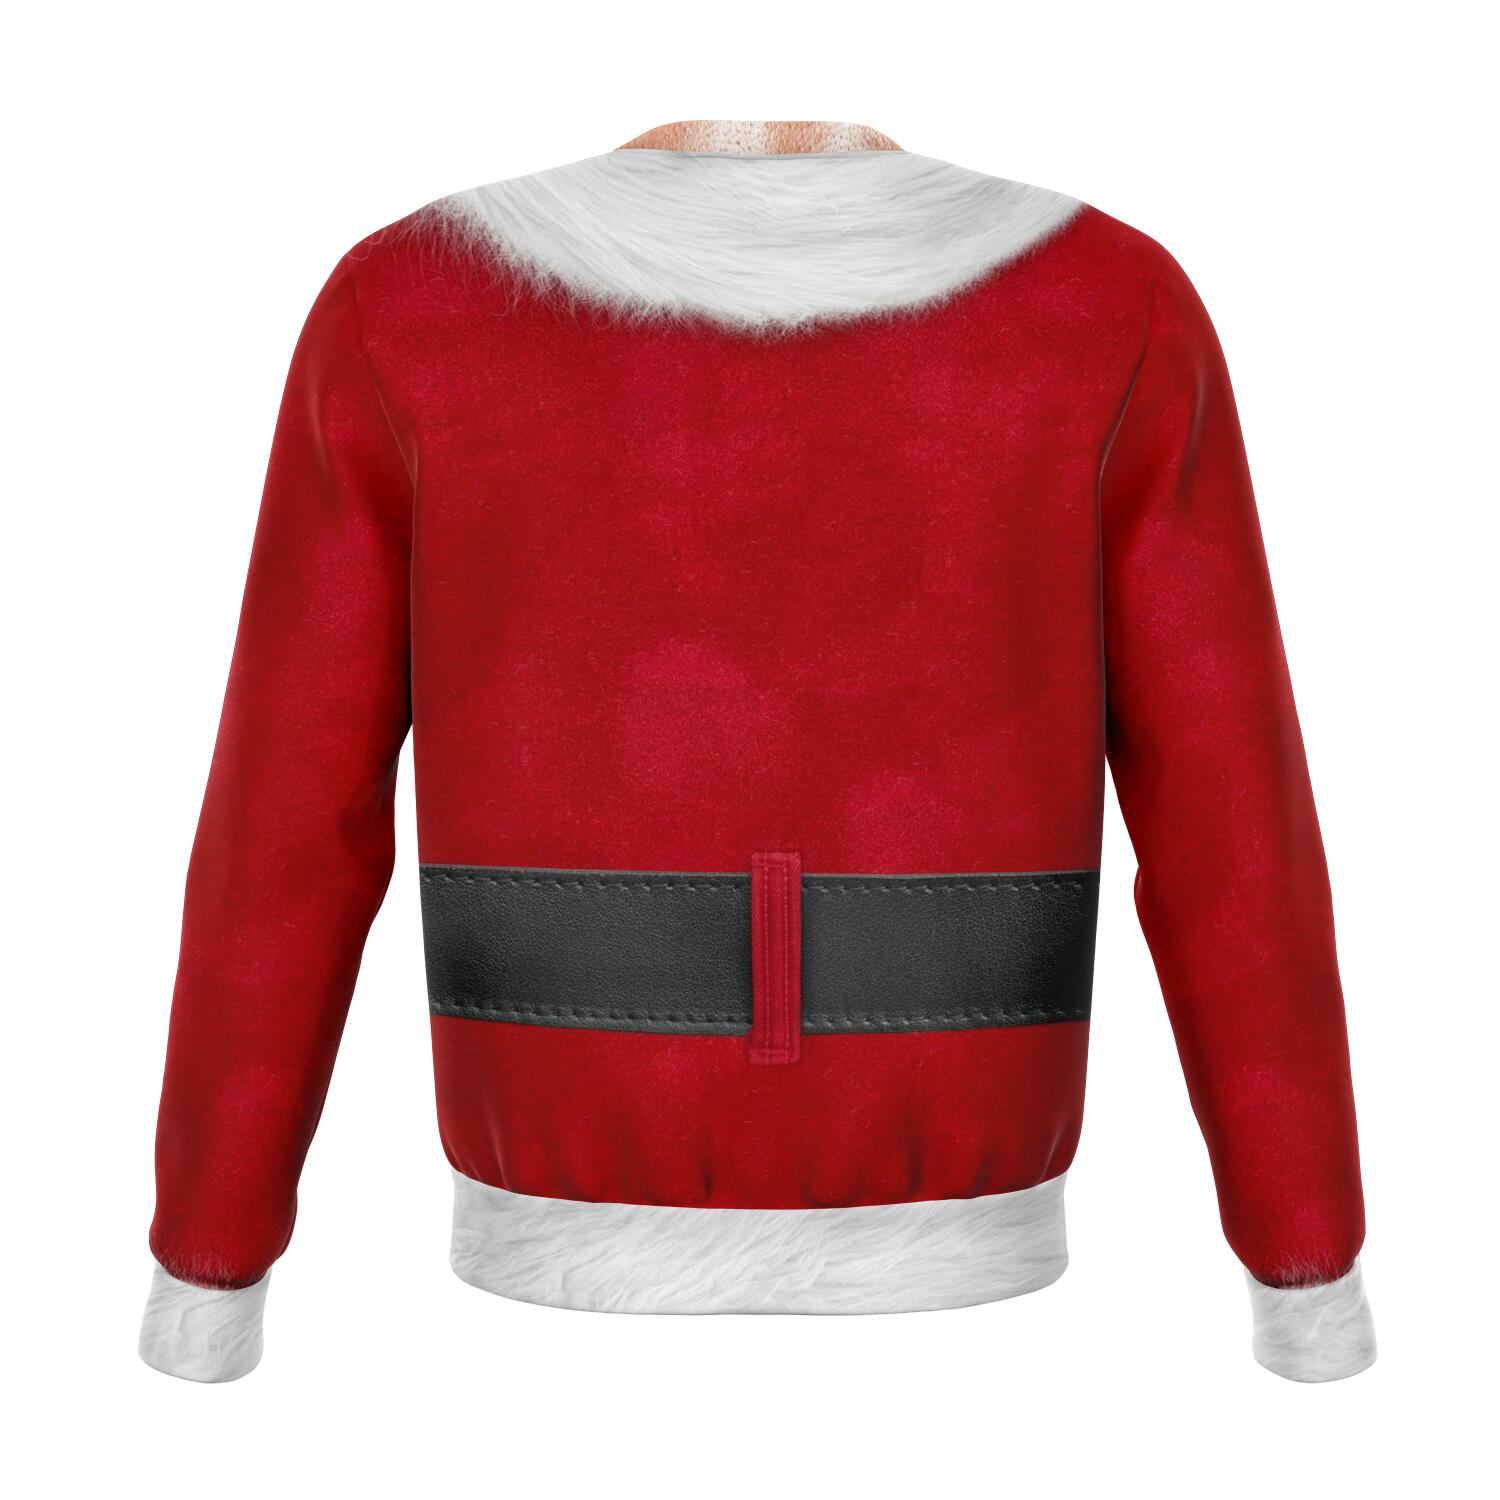 Ripped Santa Sweater